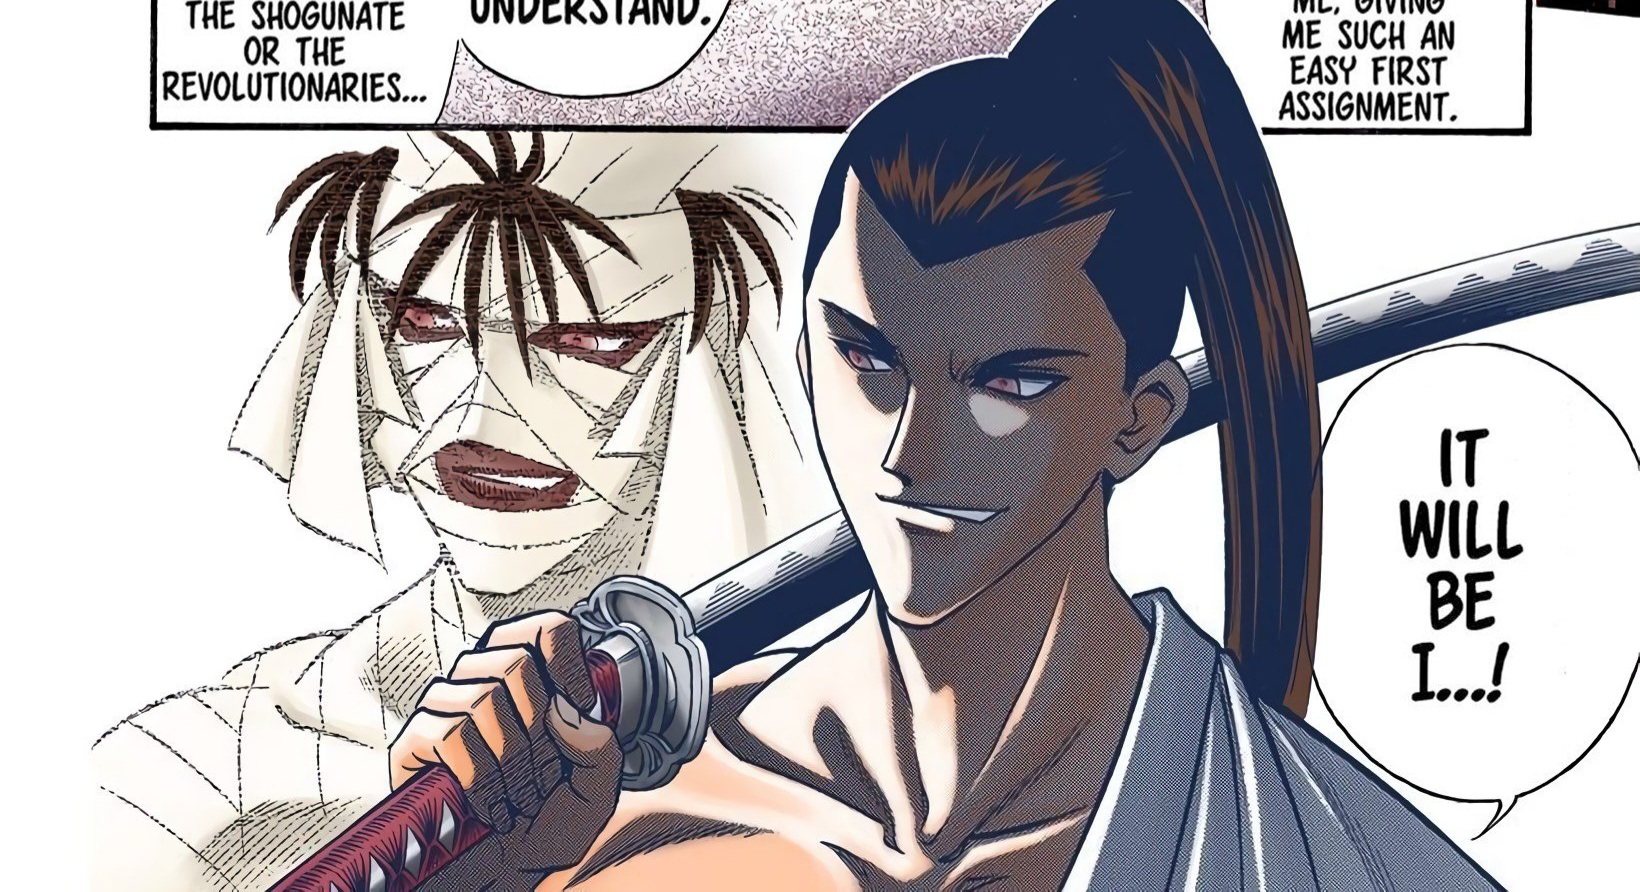 Does Kenshin defeat Shishio? - Quora